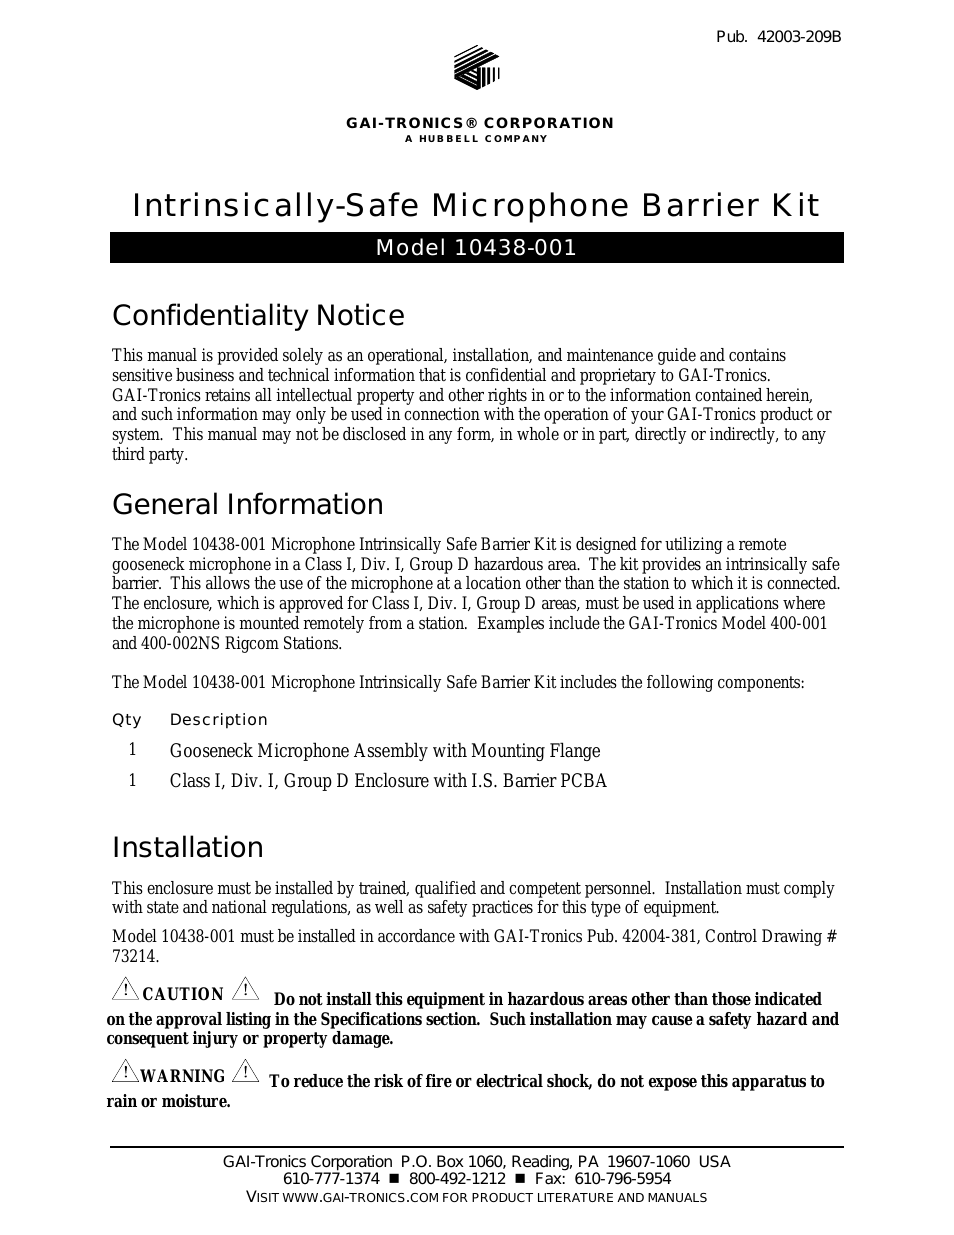 110438-001 Intrinsically-Safe Microphone Barrier Kit